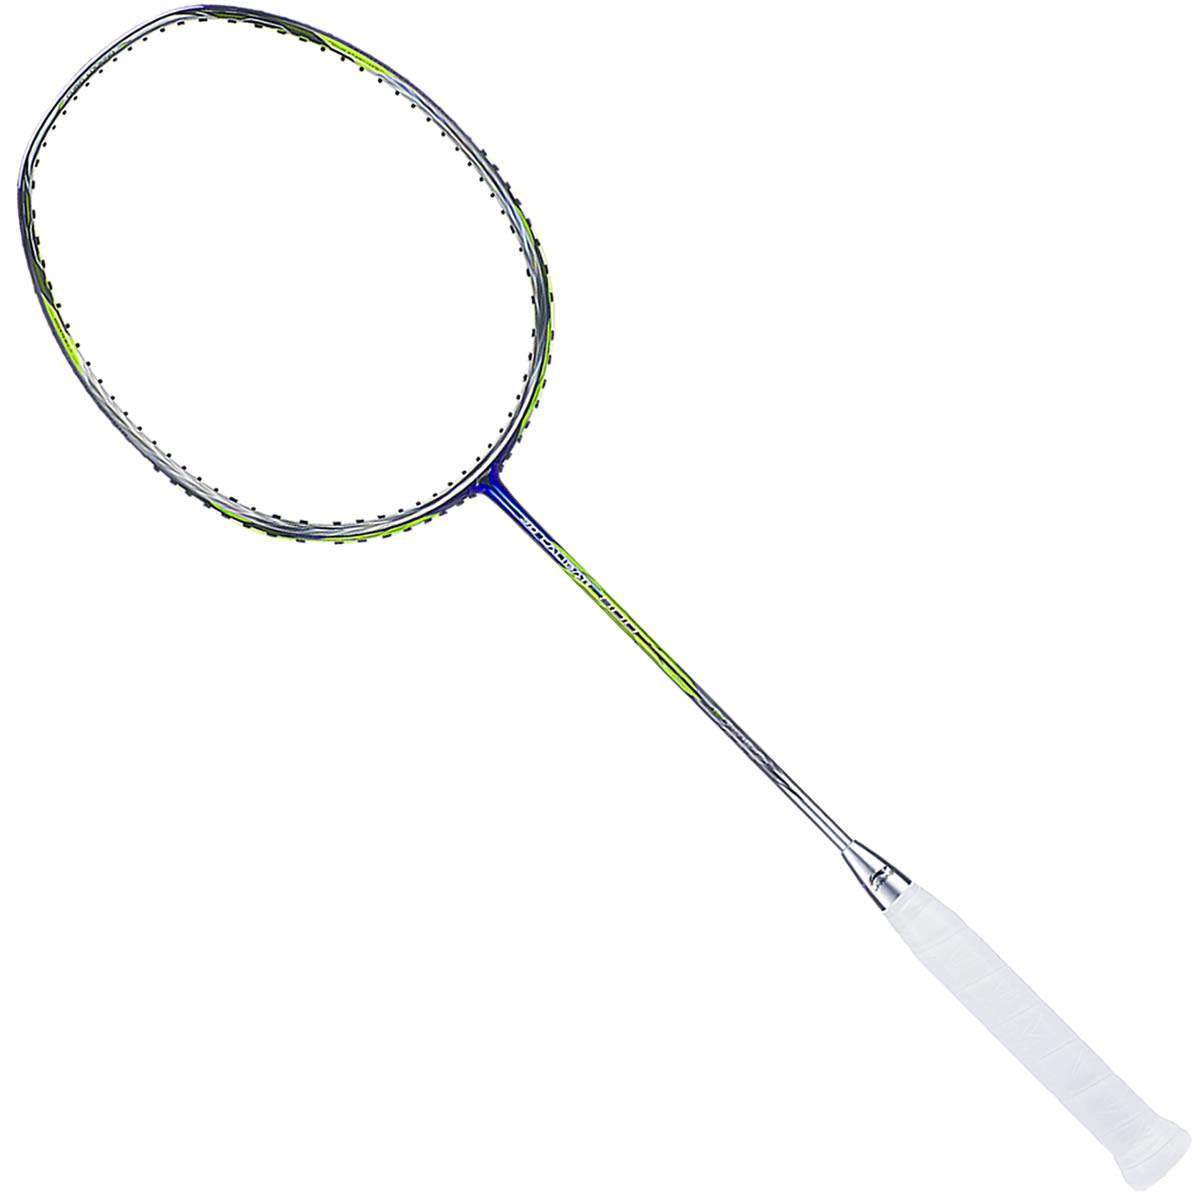 Li-Ning 3D Calibar 800 Badminton Racket  - Blue Green